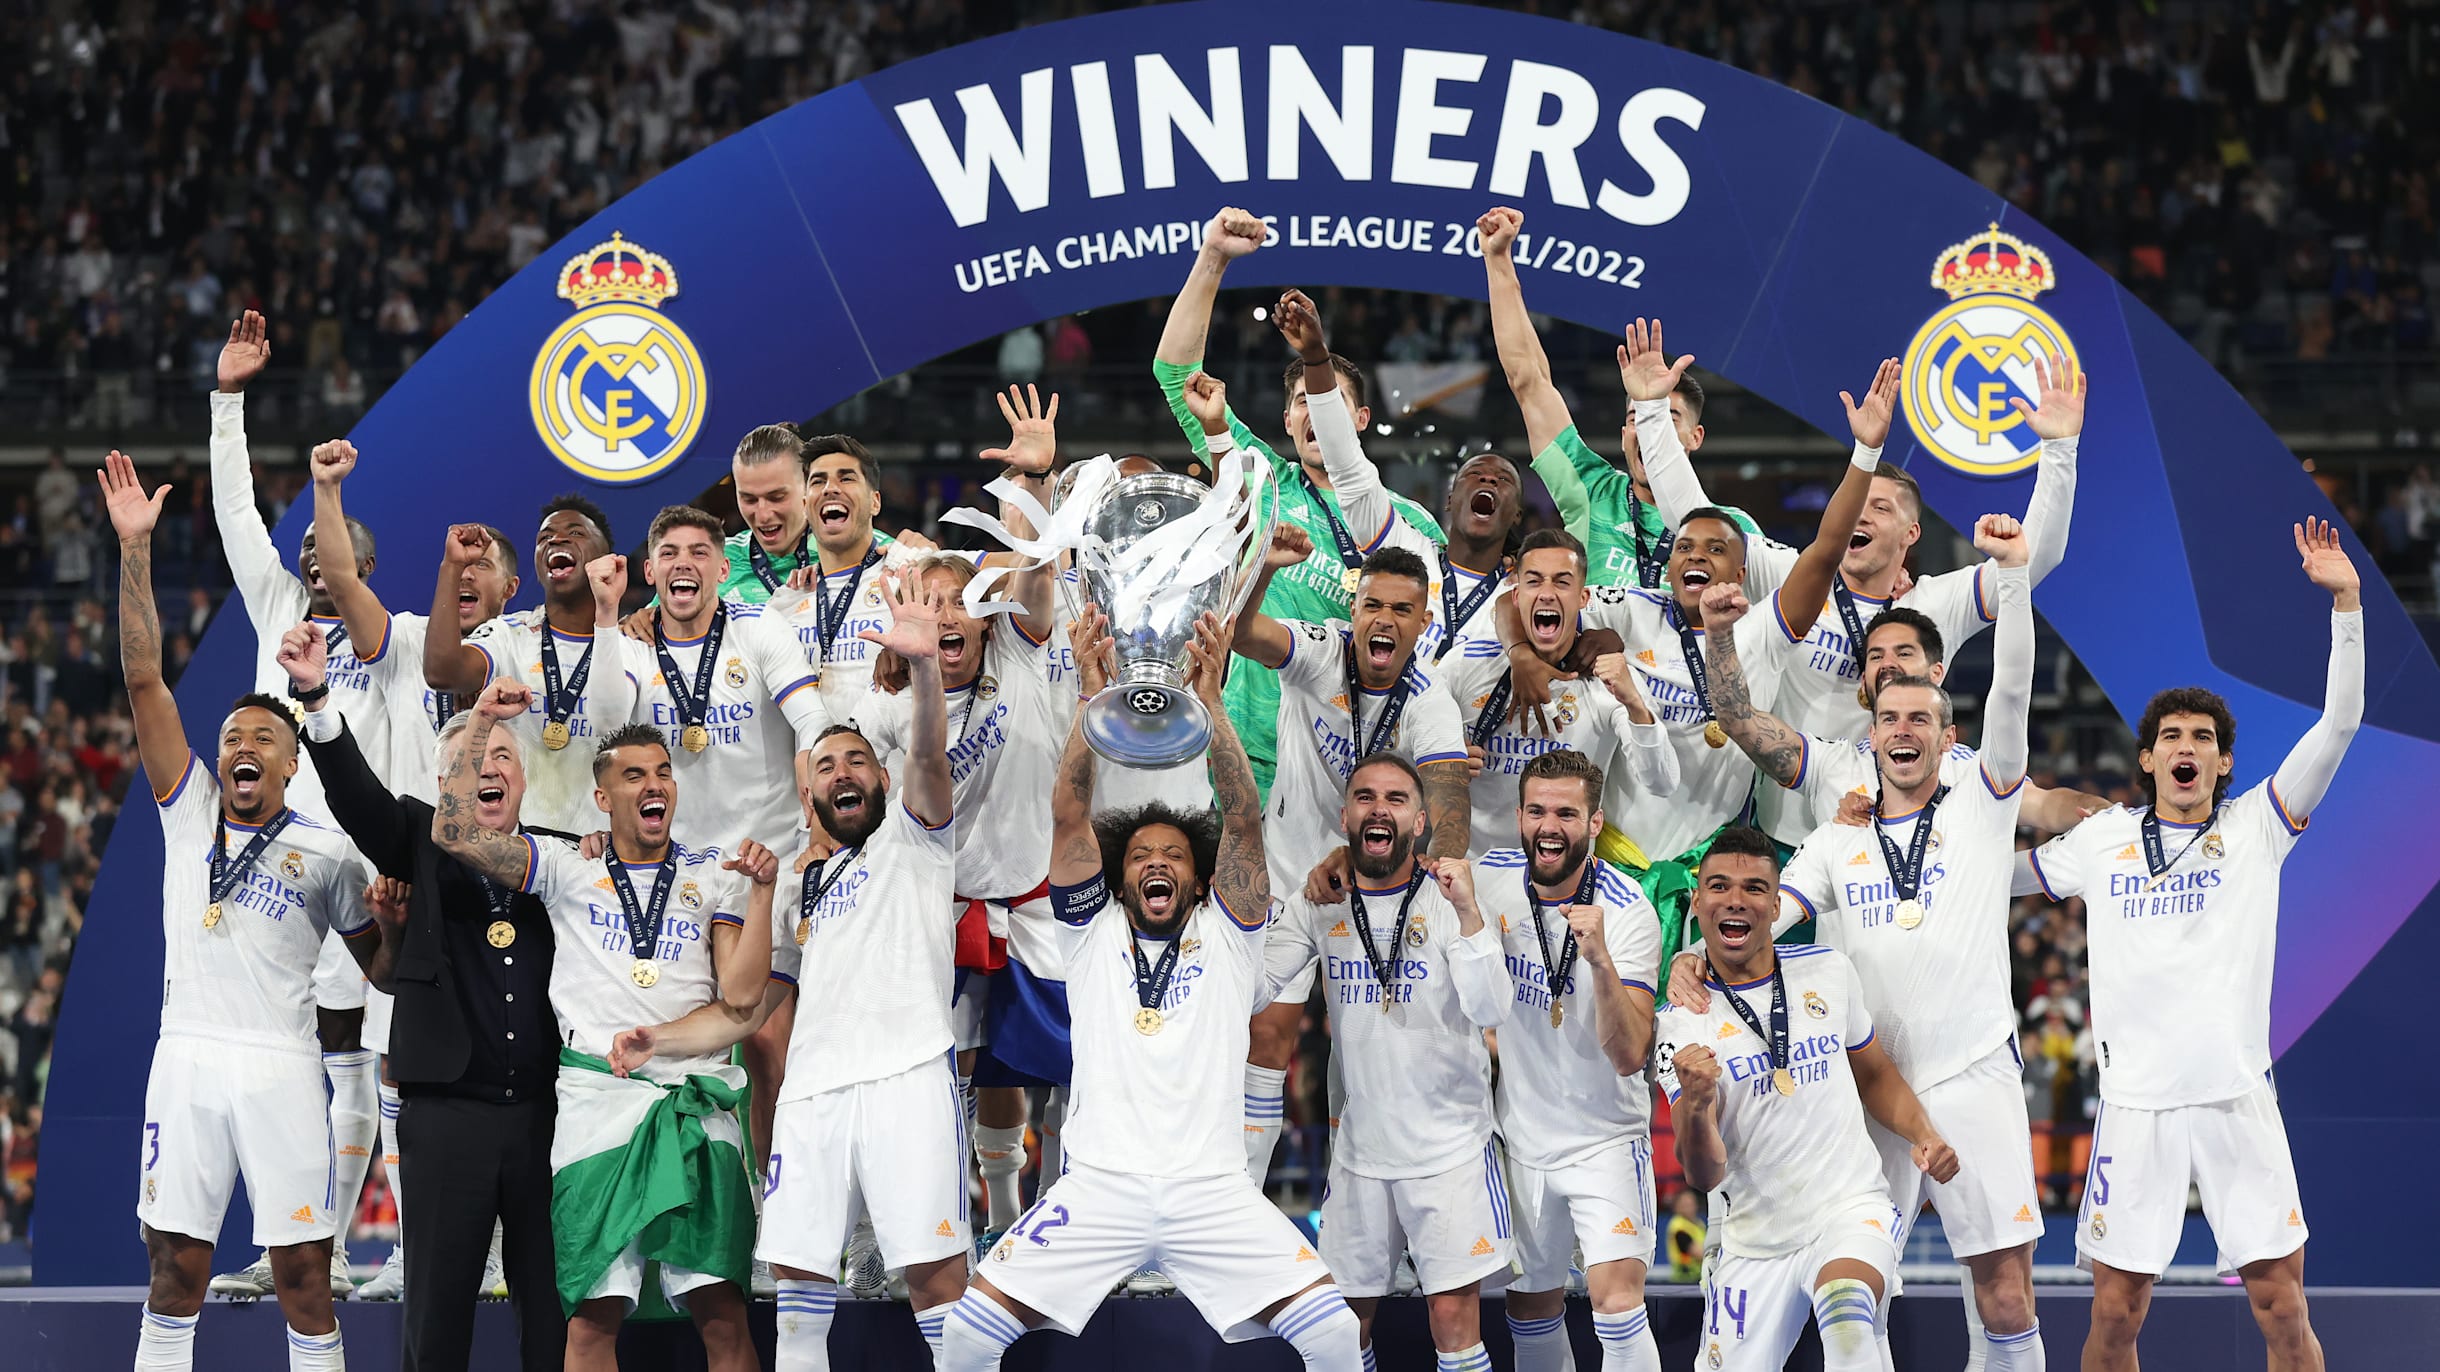 UEFA Champions League winners: The complete list